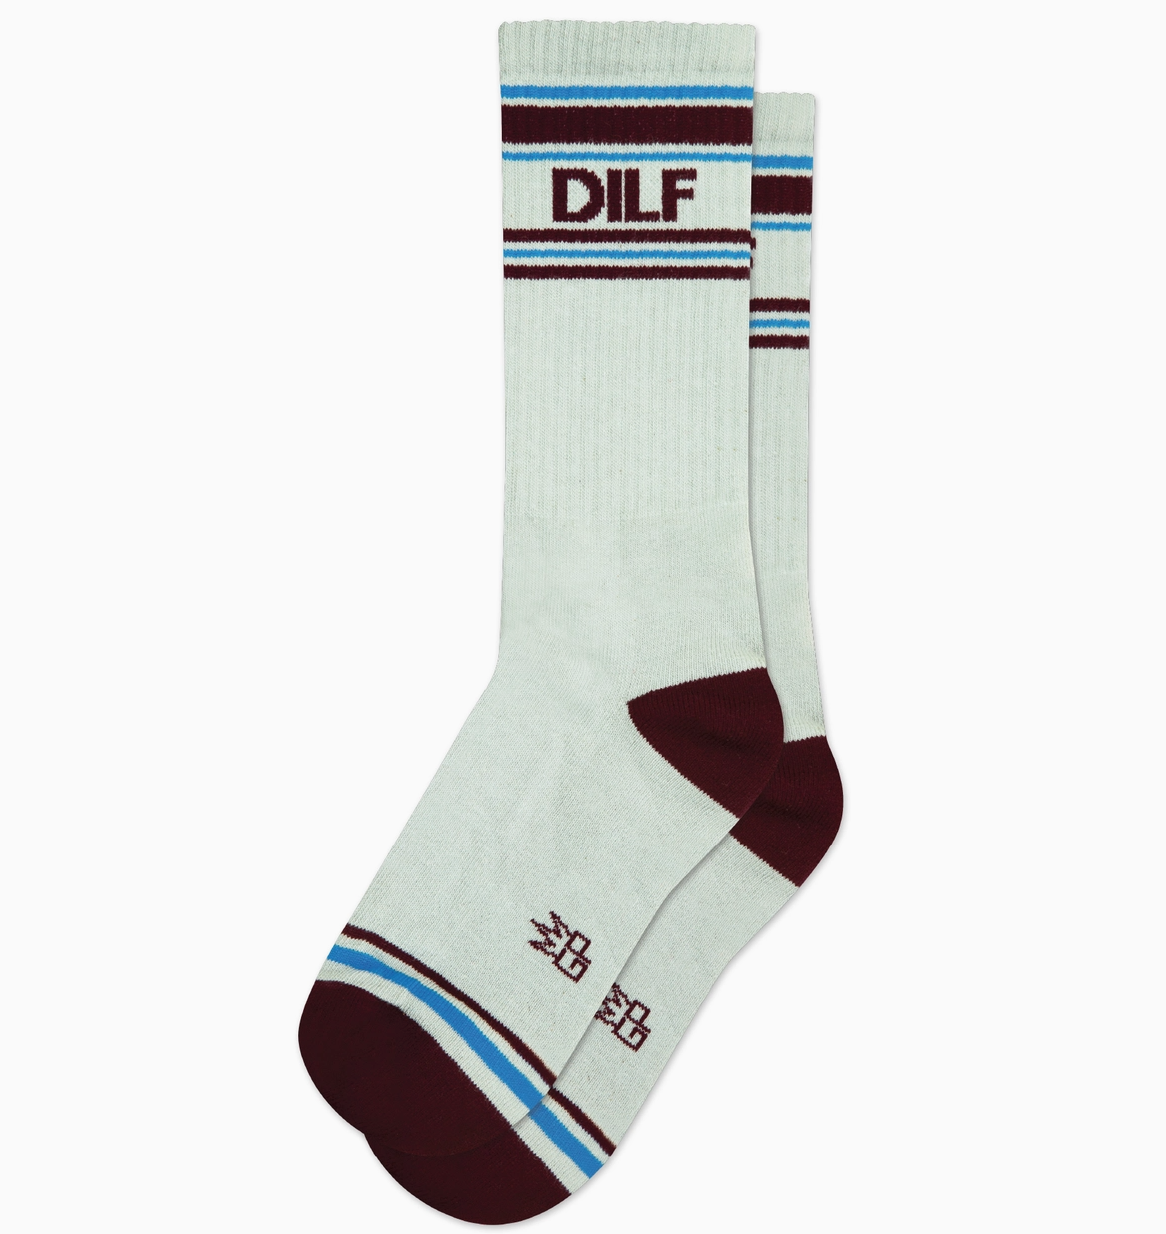 DILF Socks